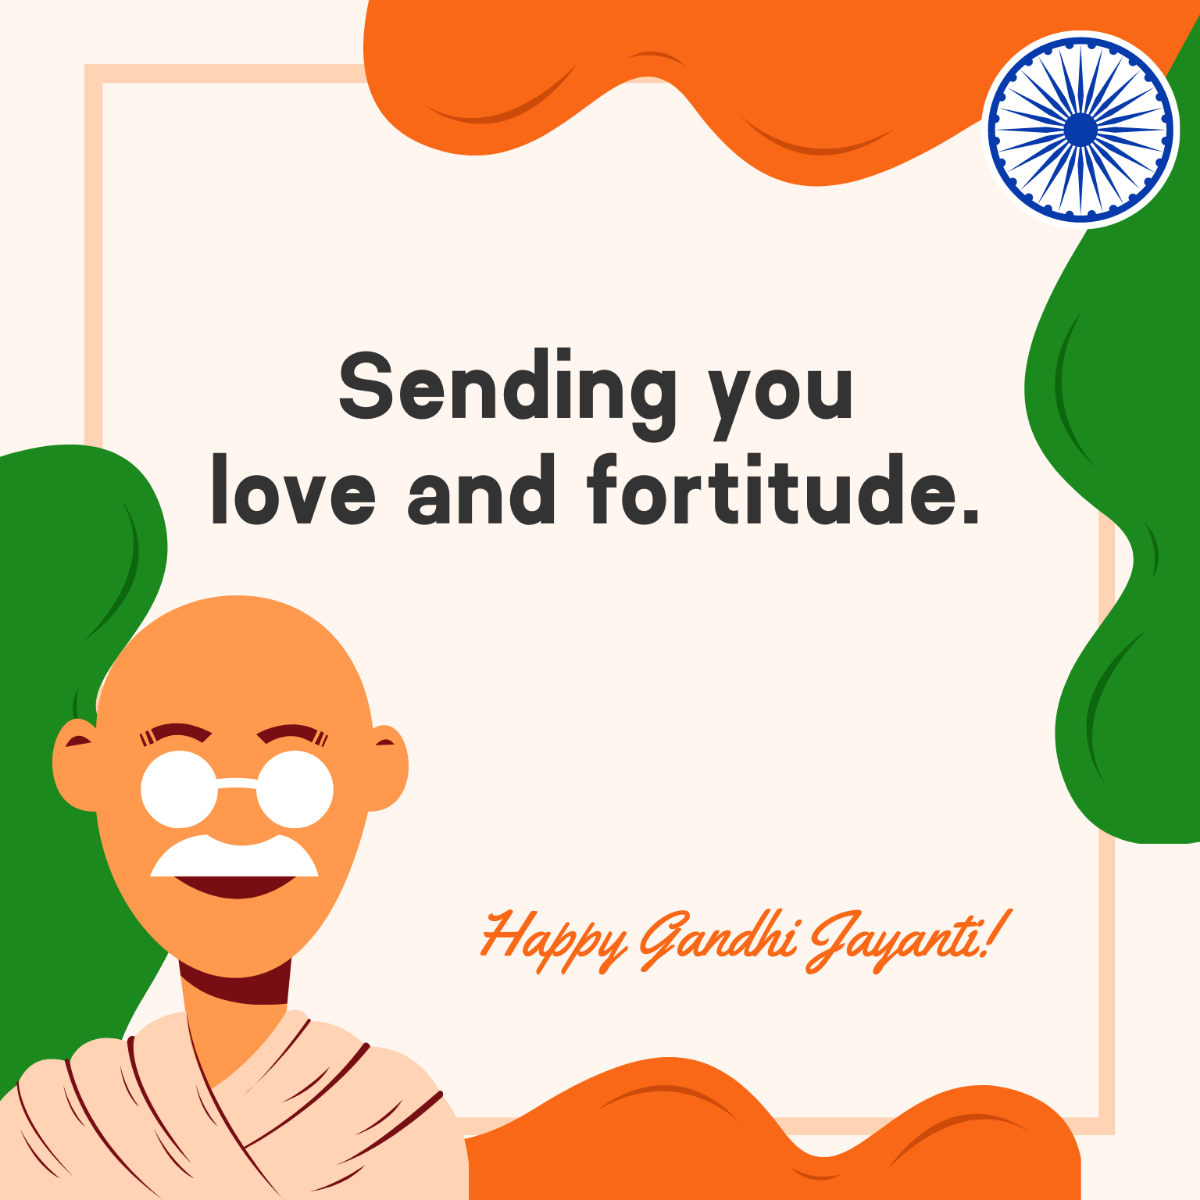 Free Gandhi Jayanti Greeting Card Vector Template